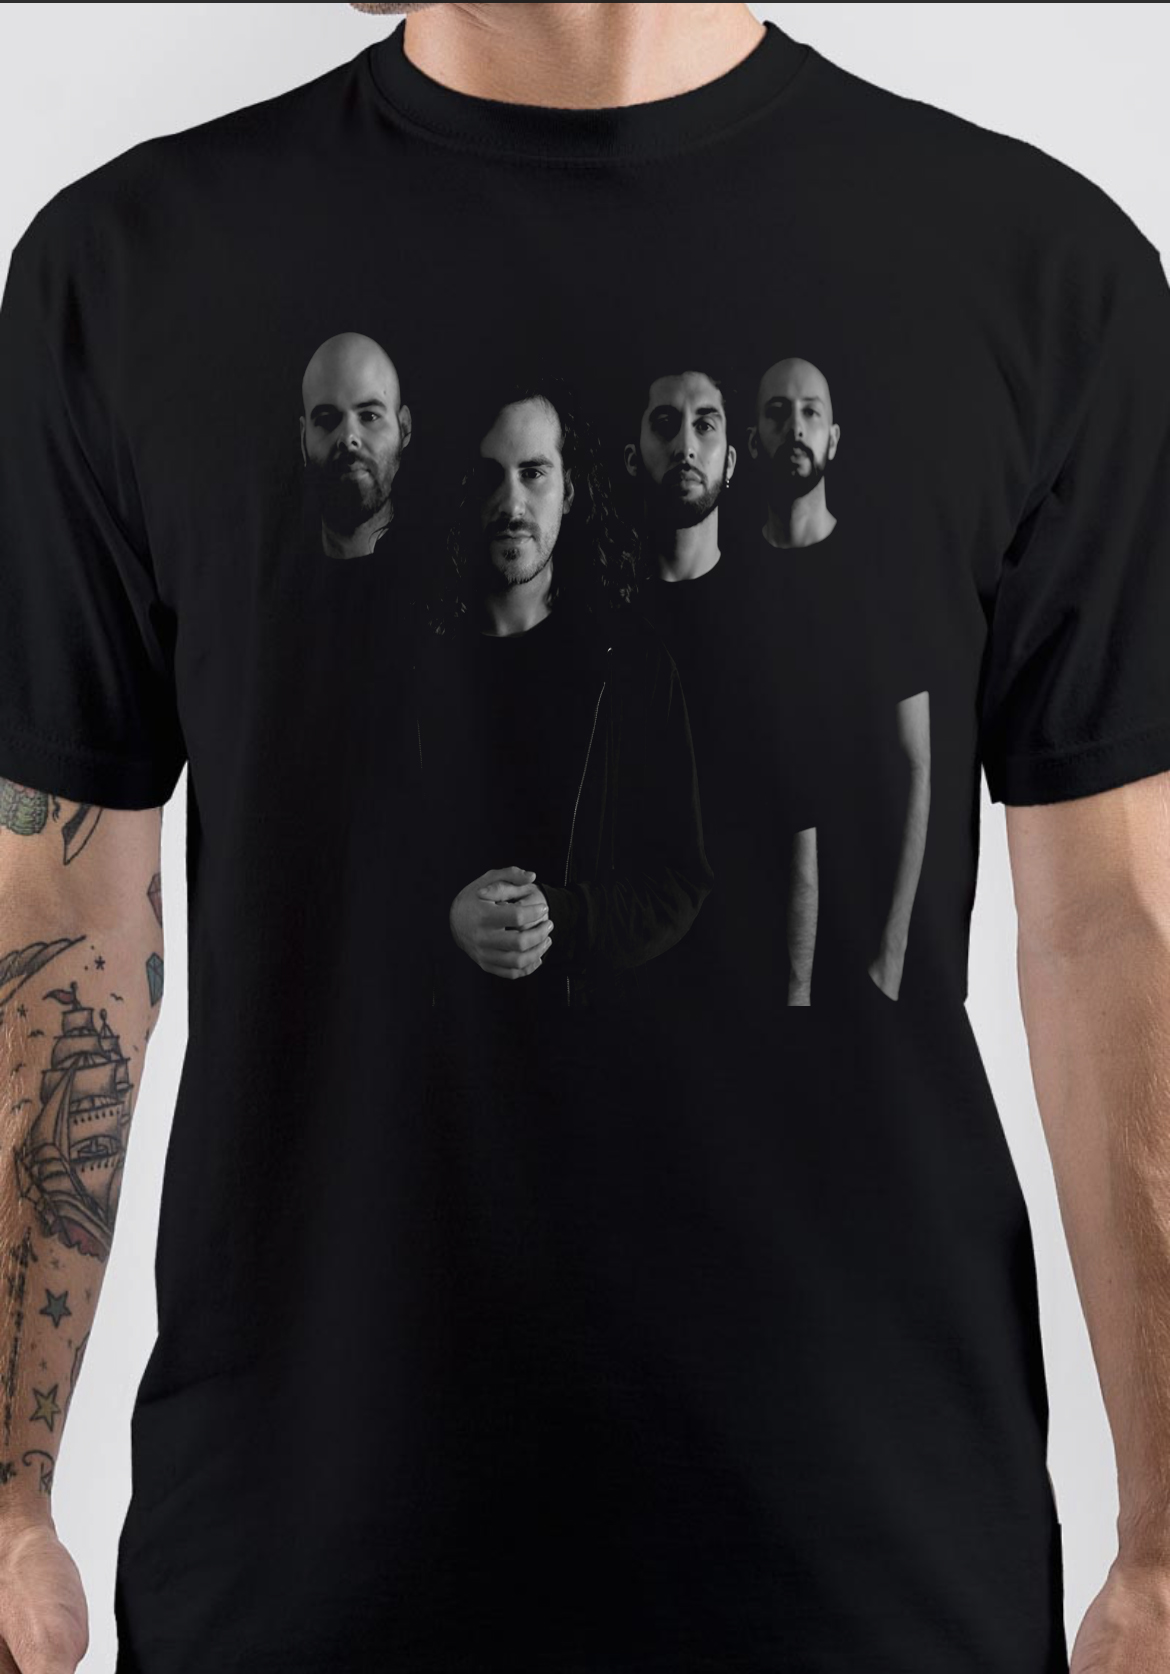 Nero Di Marte T-Shirt And Merchandise